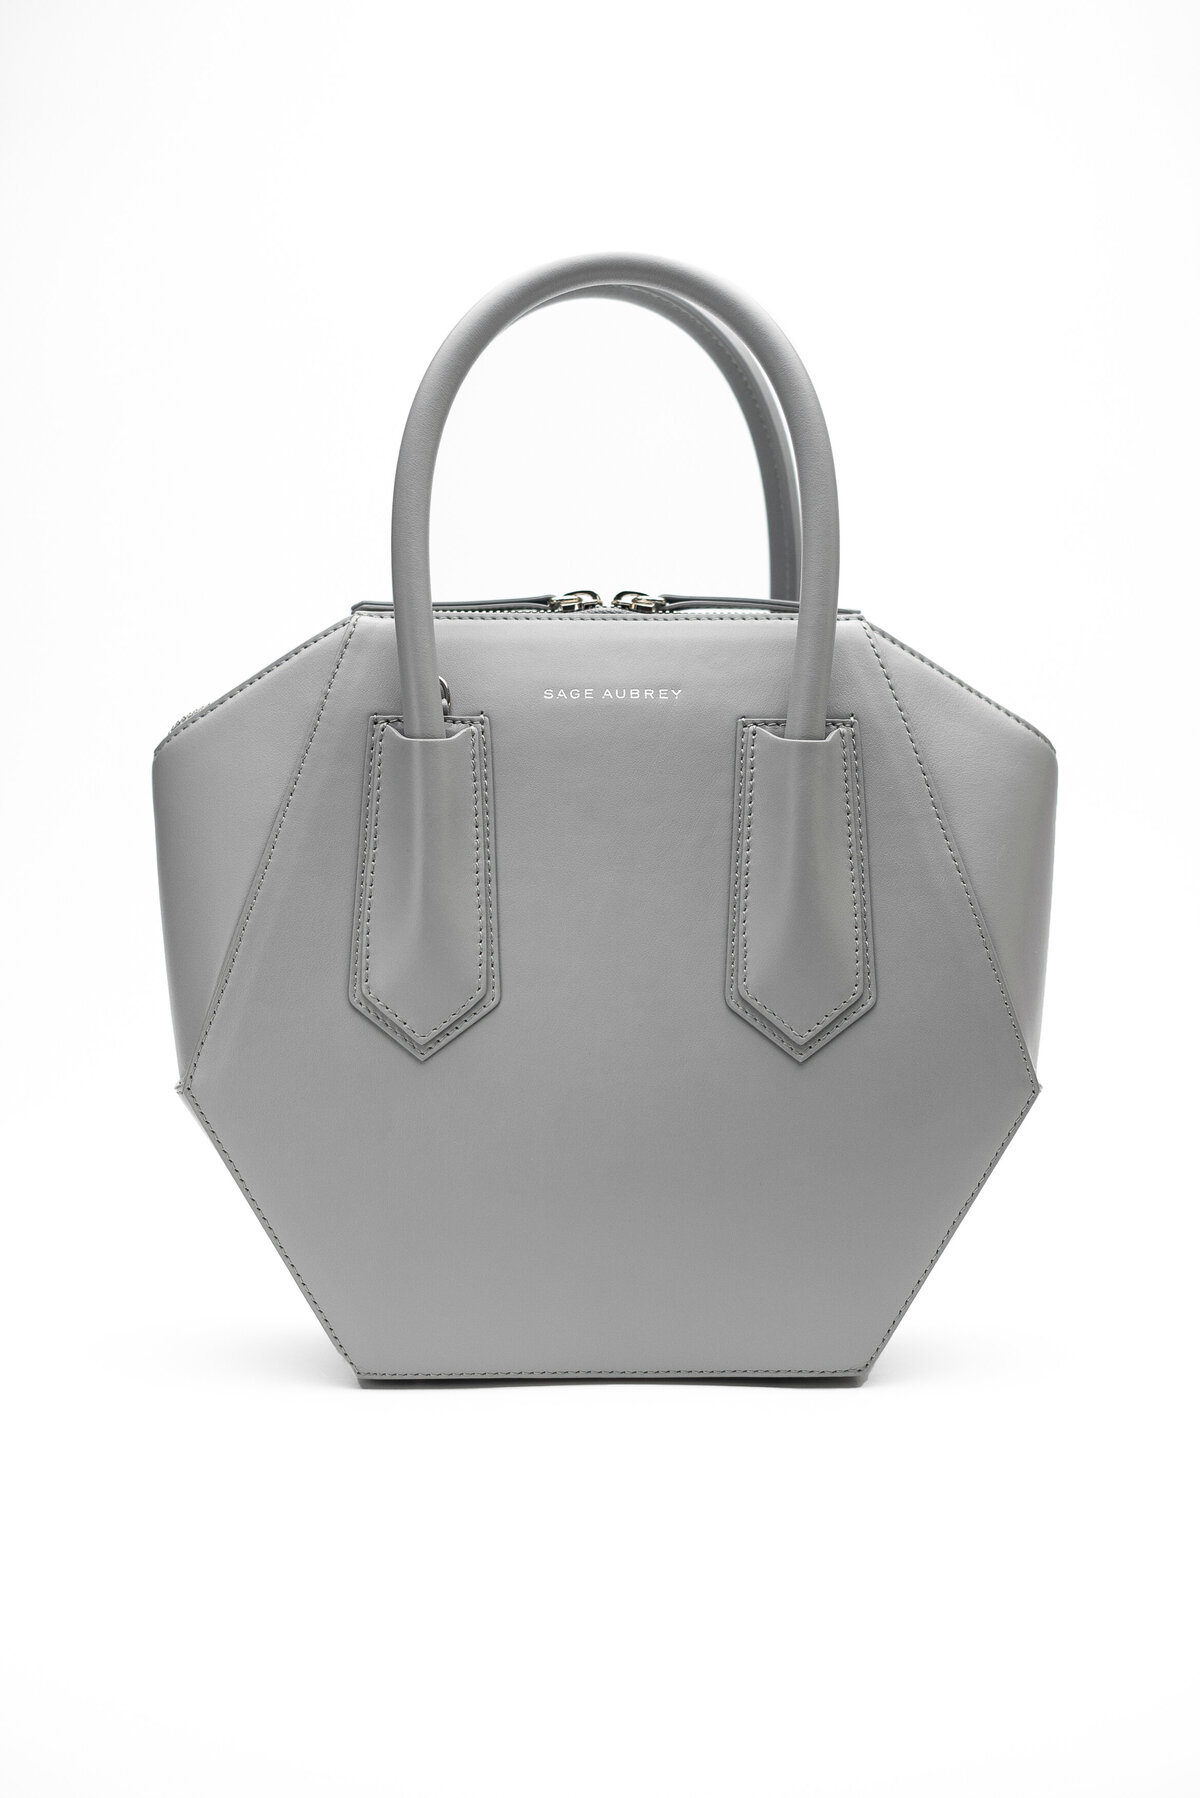 Sage Aubry geometric leather purse in gray